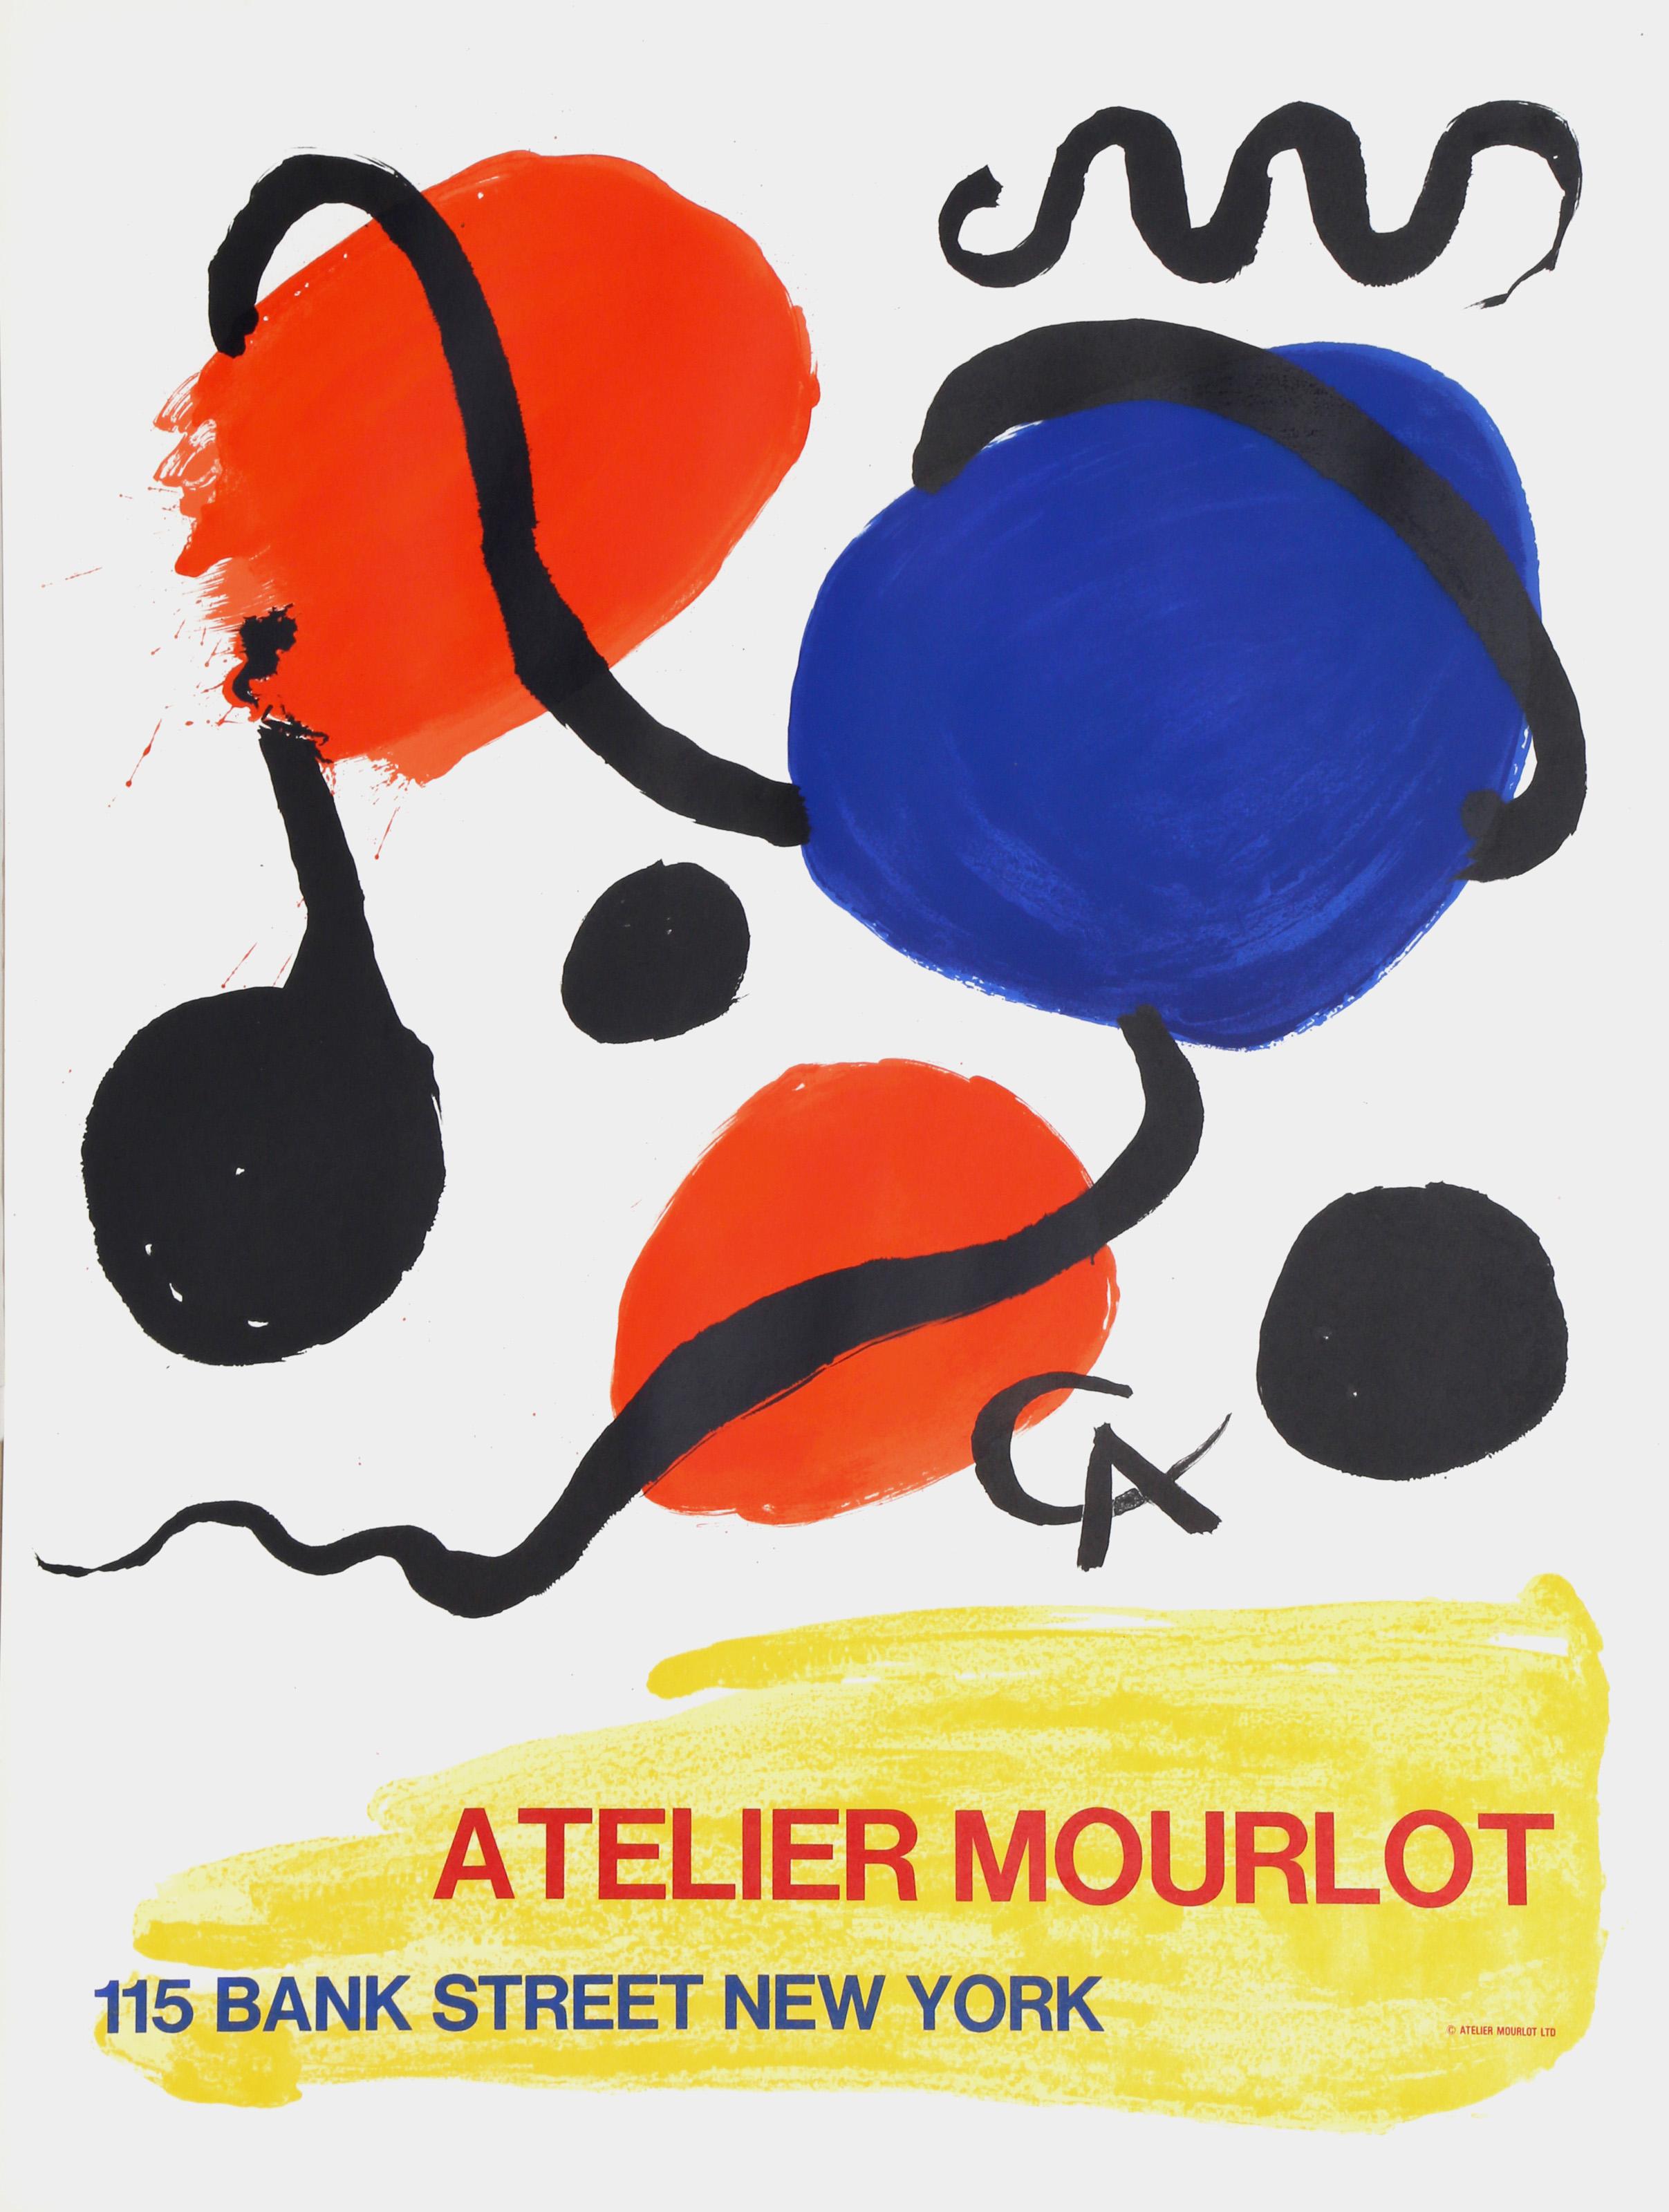 Alexander Calder, American (1898 - 1976) -  Atelier Mourlot, New York. Year: 1967, Medium: Lithograph Poster, Edition: 1000, Size: 28  x 21 in. (71.12  x 53.34 cm), Printer: Atelier Mourlot, Publisher: Mourlot, Description: When The Mourlot Studio